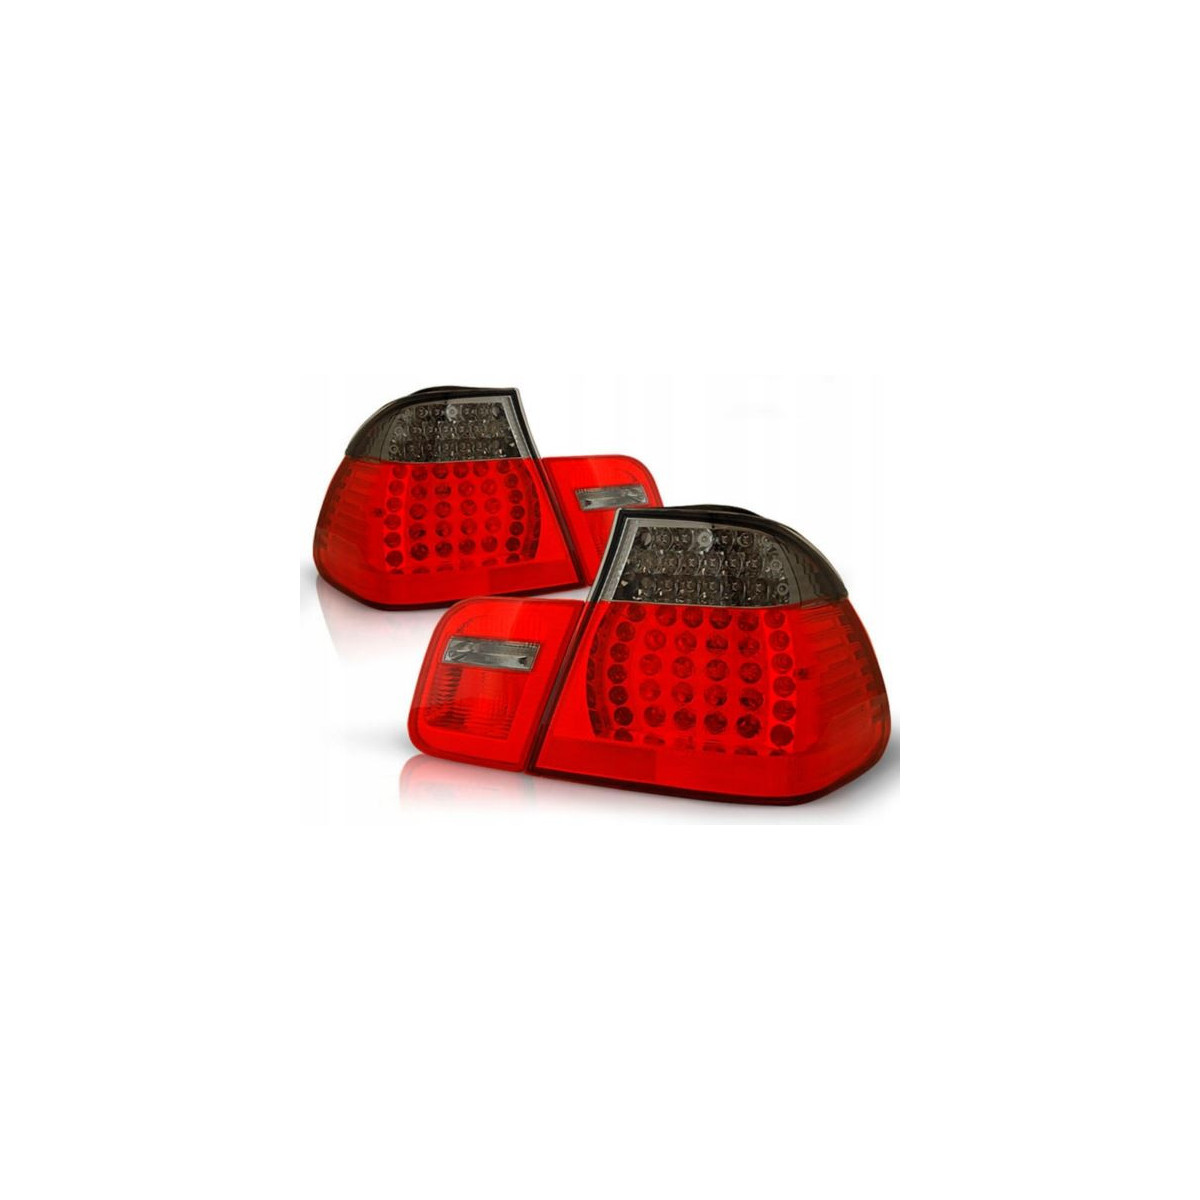 LAMPY TYLNE BMW E46 02-04 RED SMOKE SEDAN LED